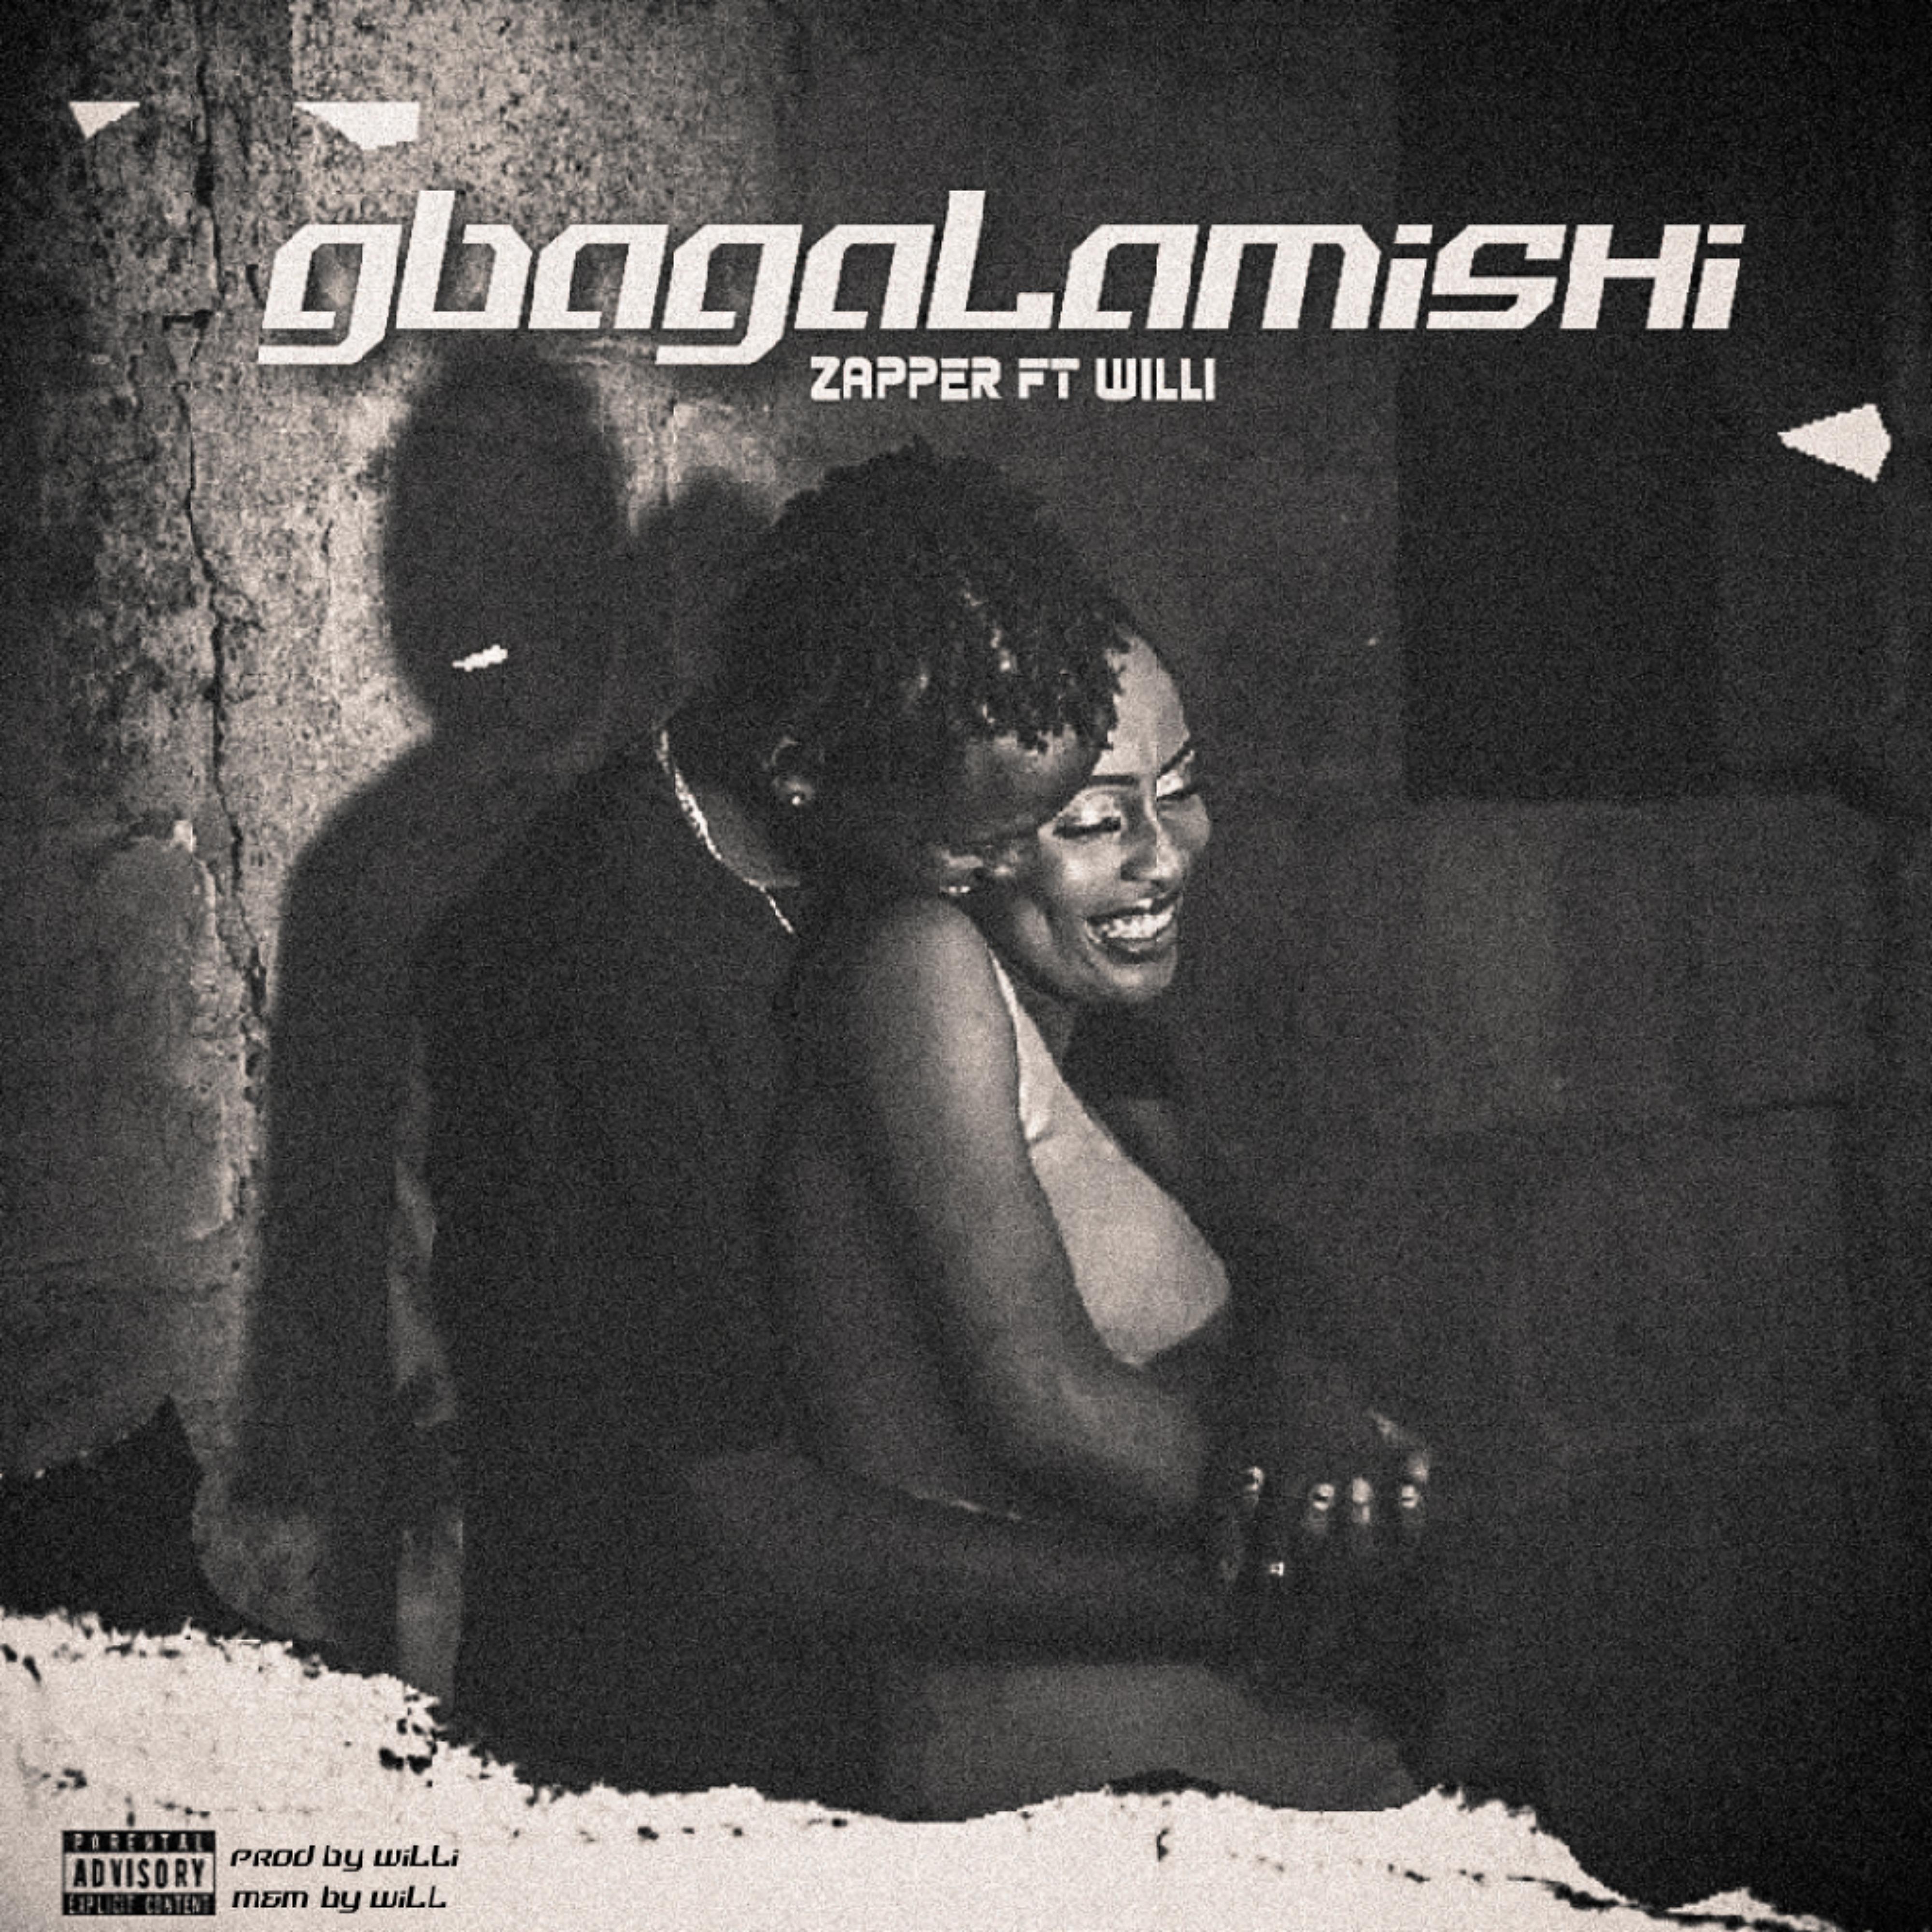 Постер альбома Gbagalamishi